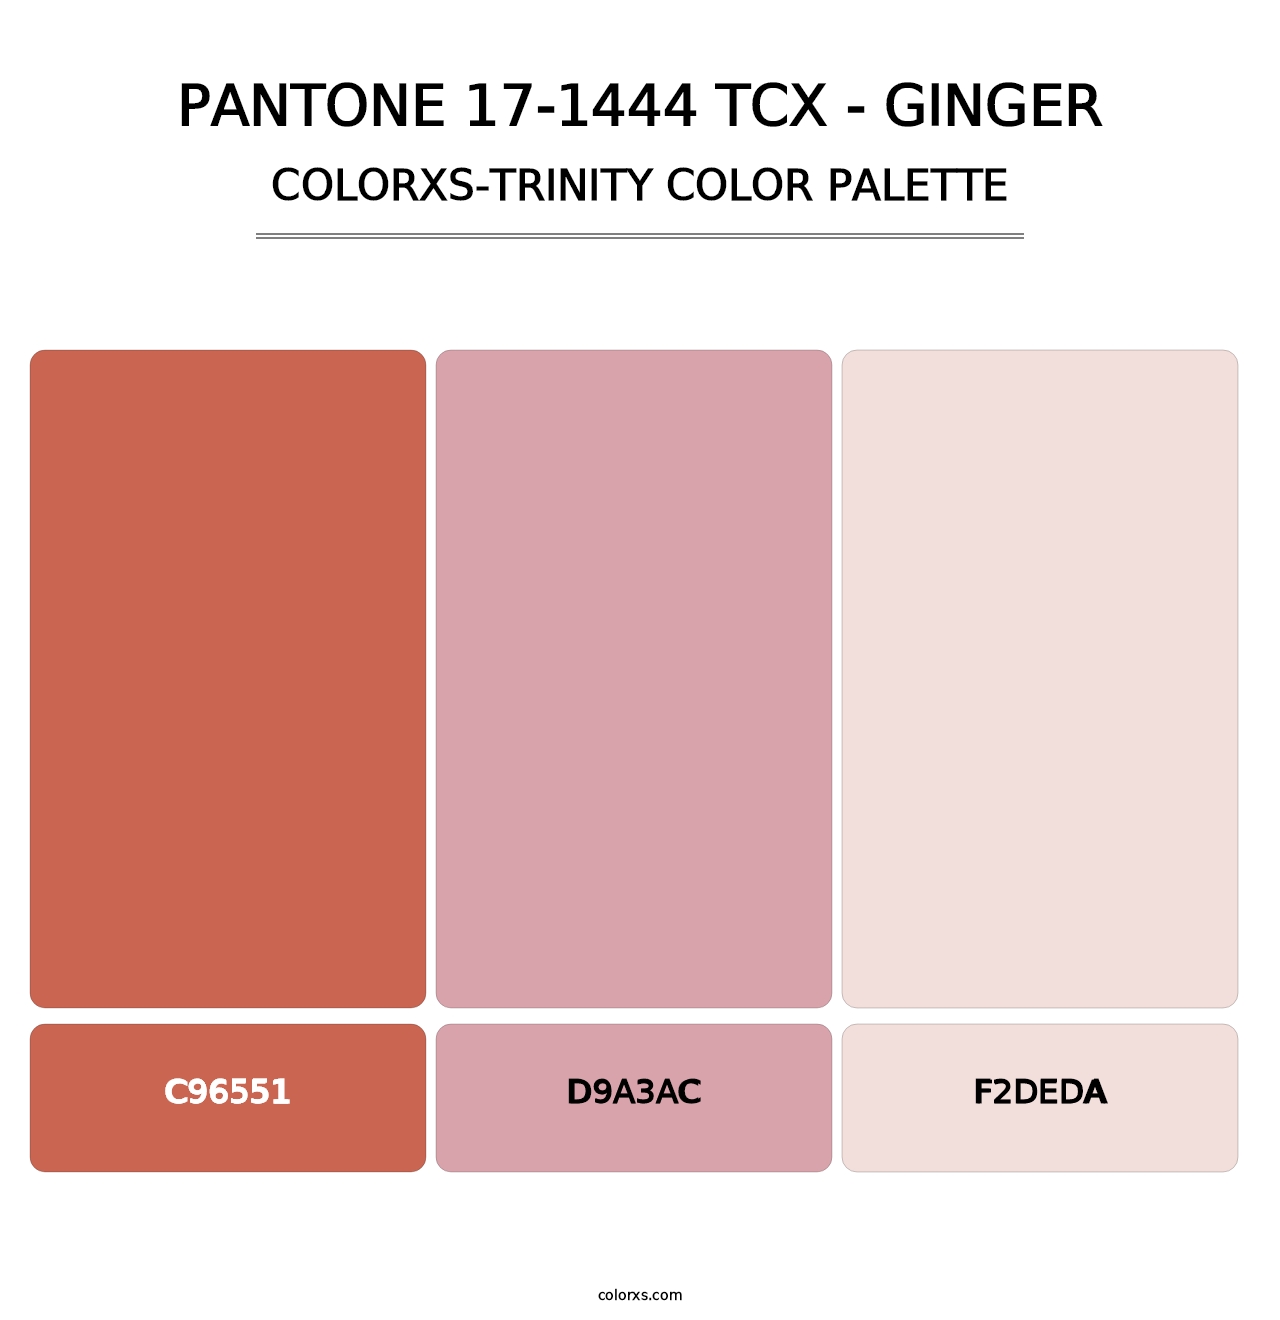 PANTONE 17-1444 TCX - Ginger - Colorxs Trinity Palette